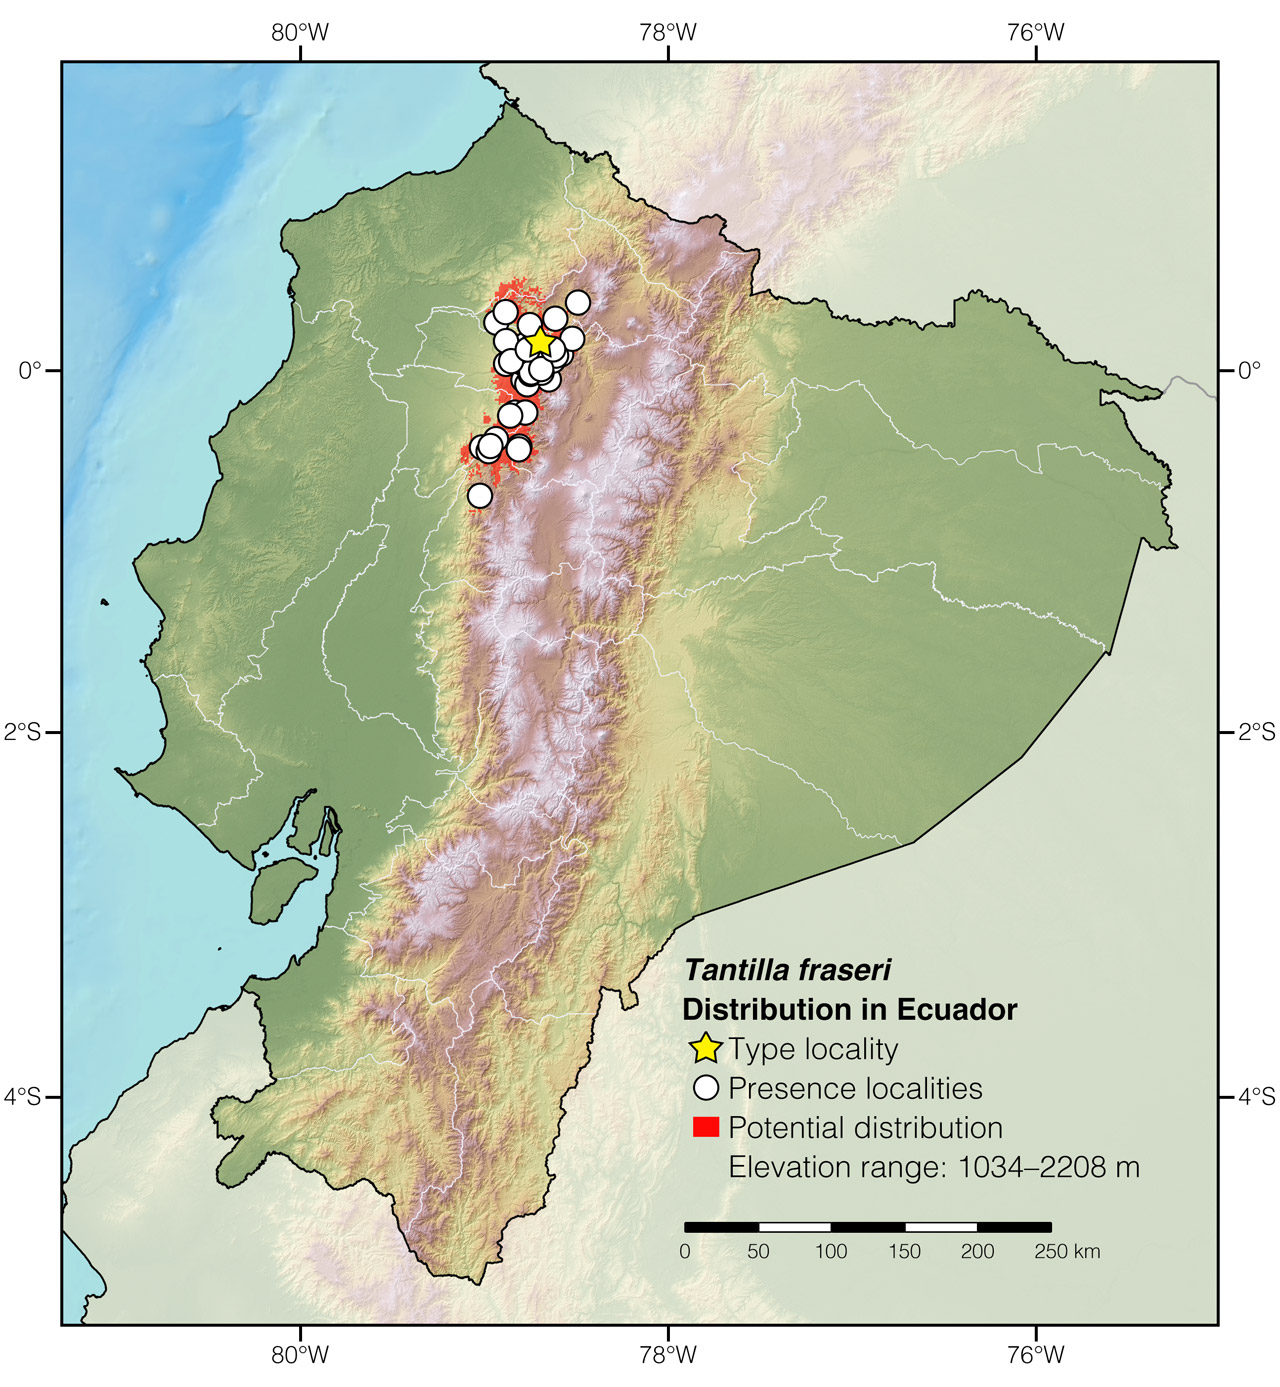 Distribution of Tantilla fraseri in Ecuador